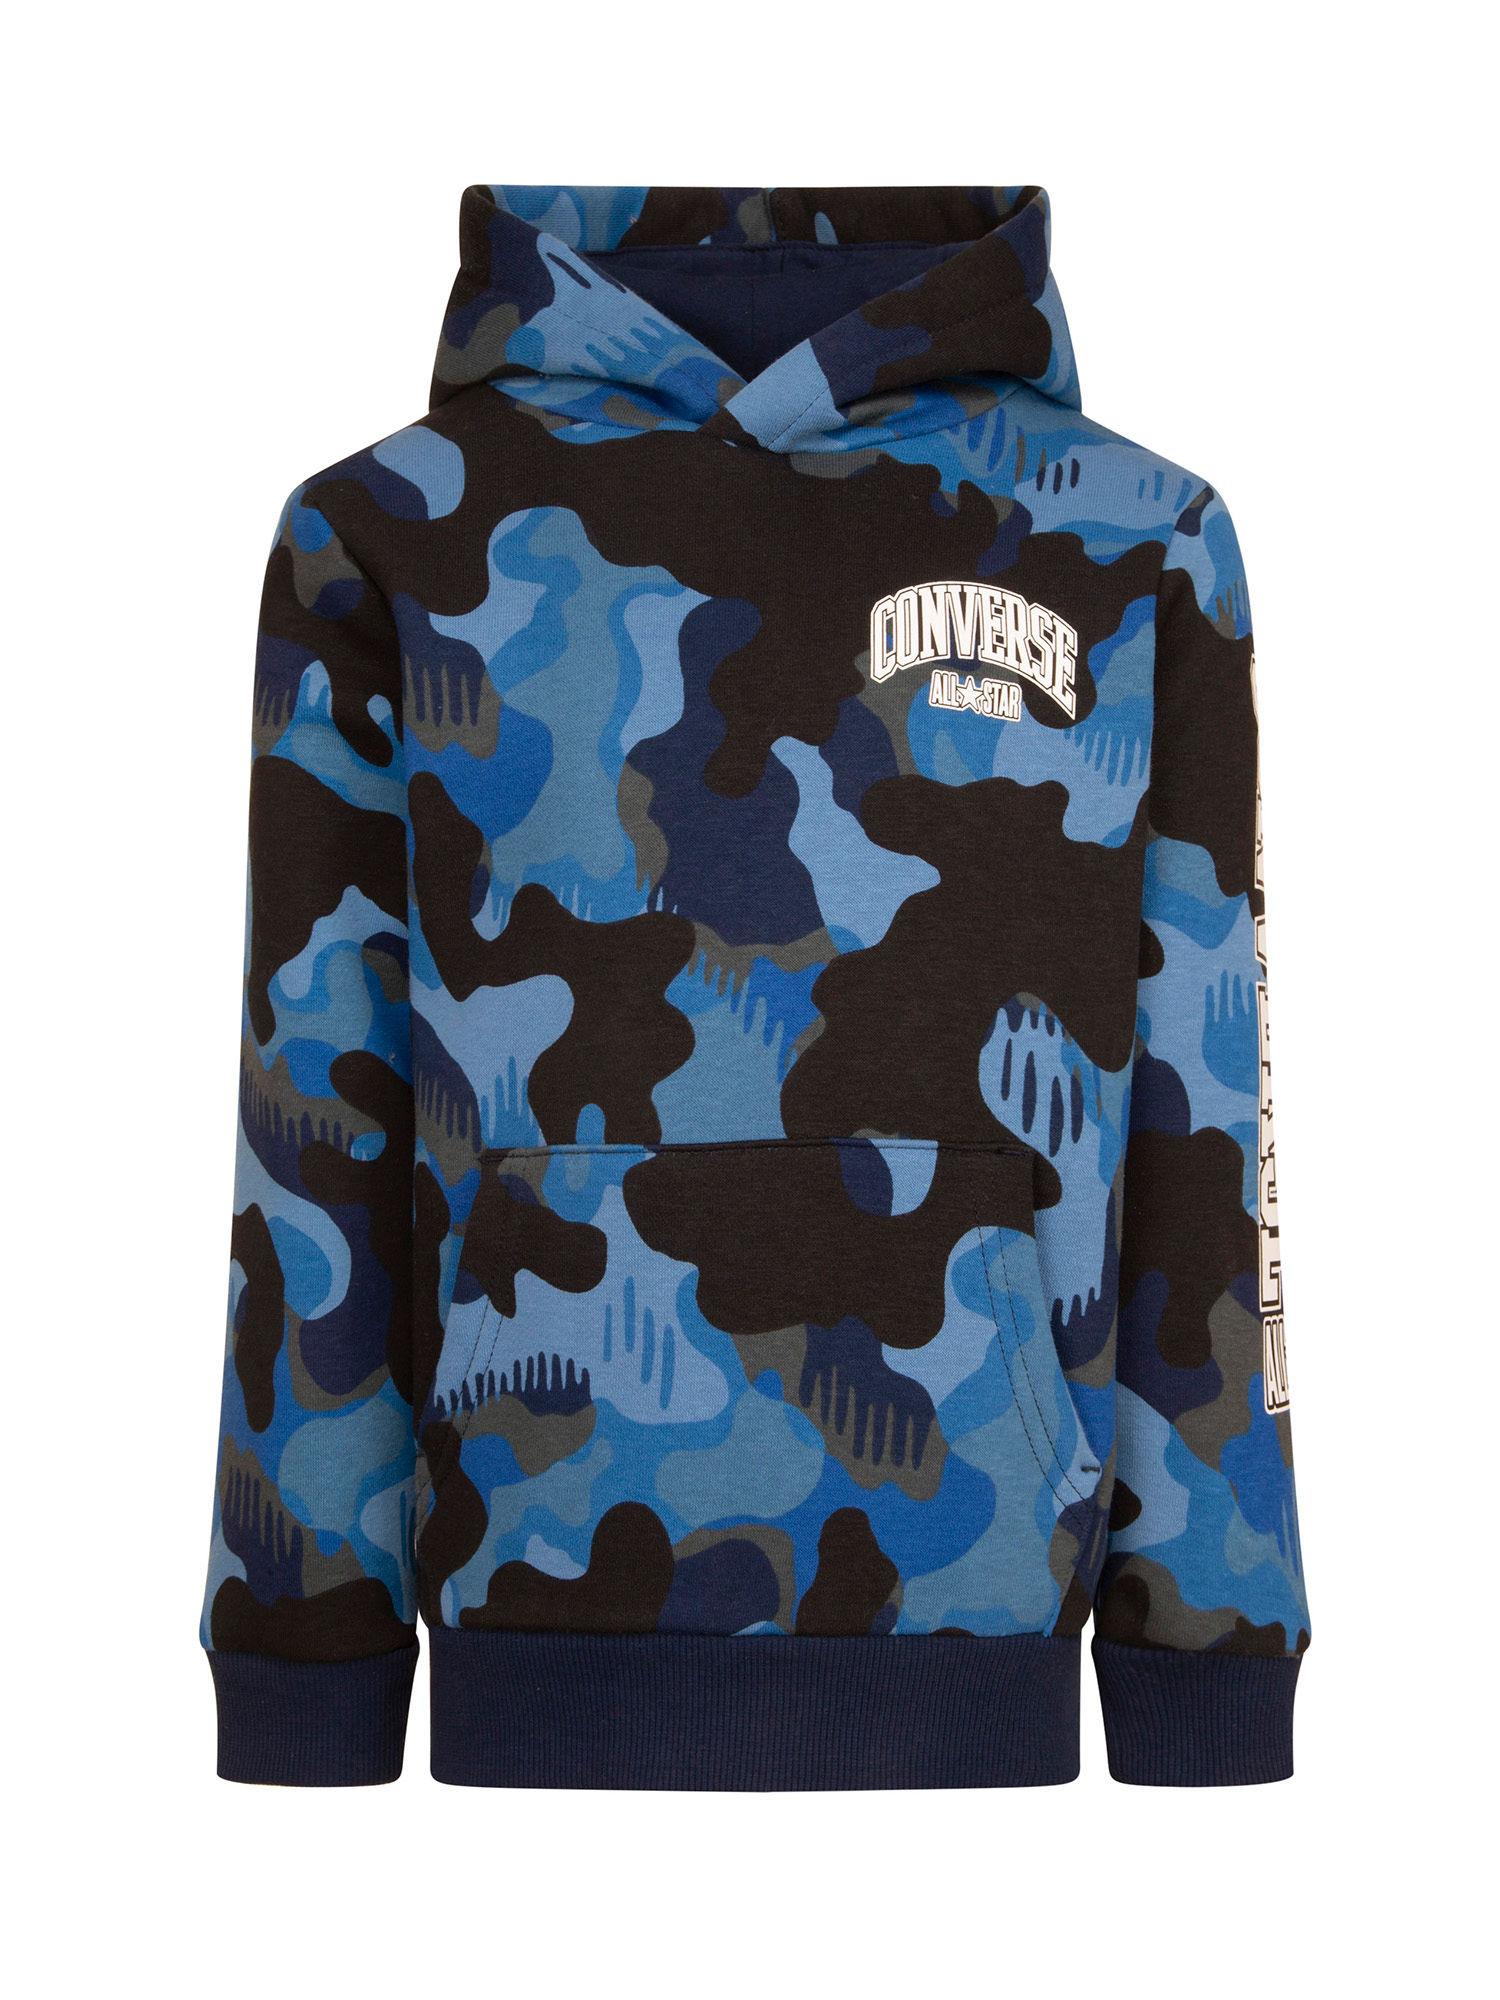 boys navy blue camouflage hoodie